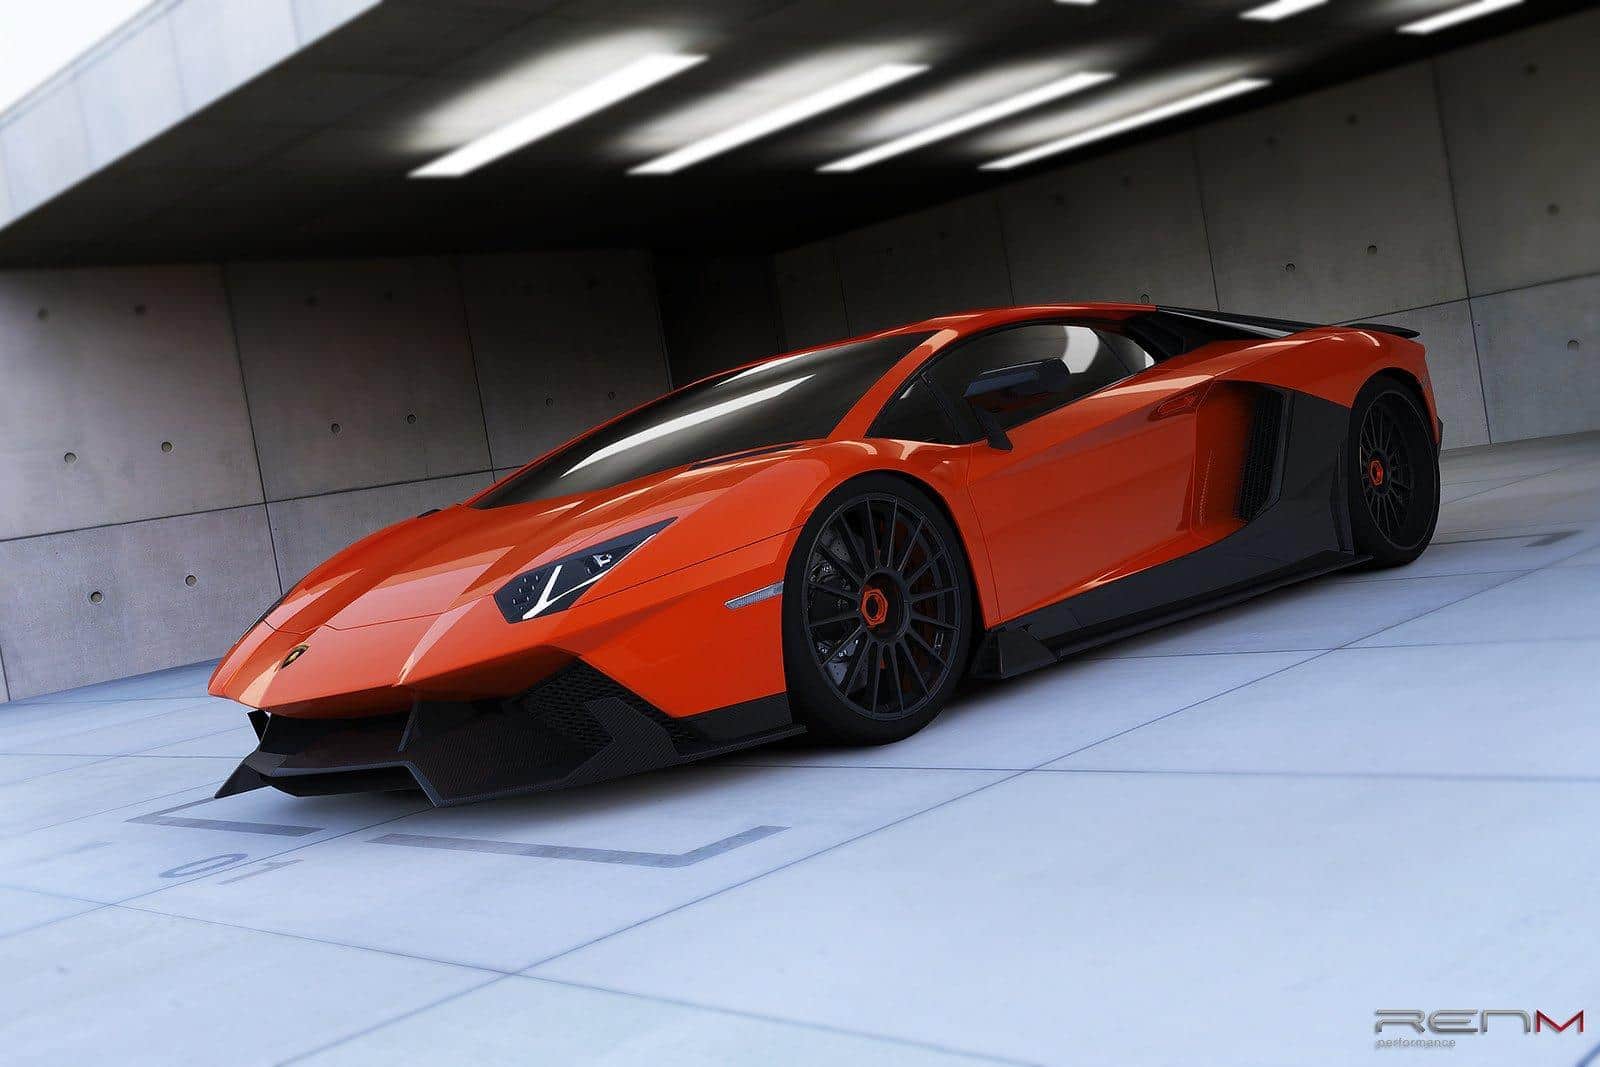 http://cdn.luxatic.com/wp-content/uploads/2012/07/Lamborghini-Aventador-Limited-Edition-Corsa-by-RENM-1.jpg